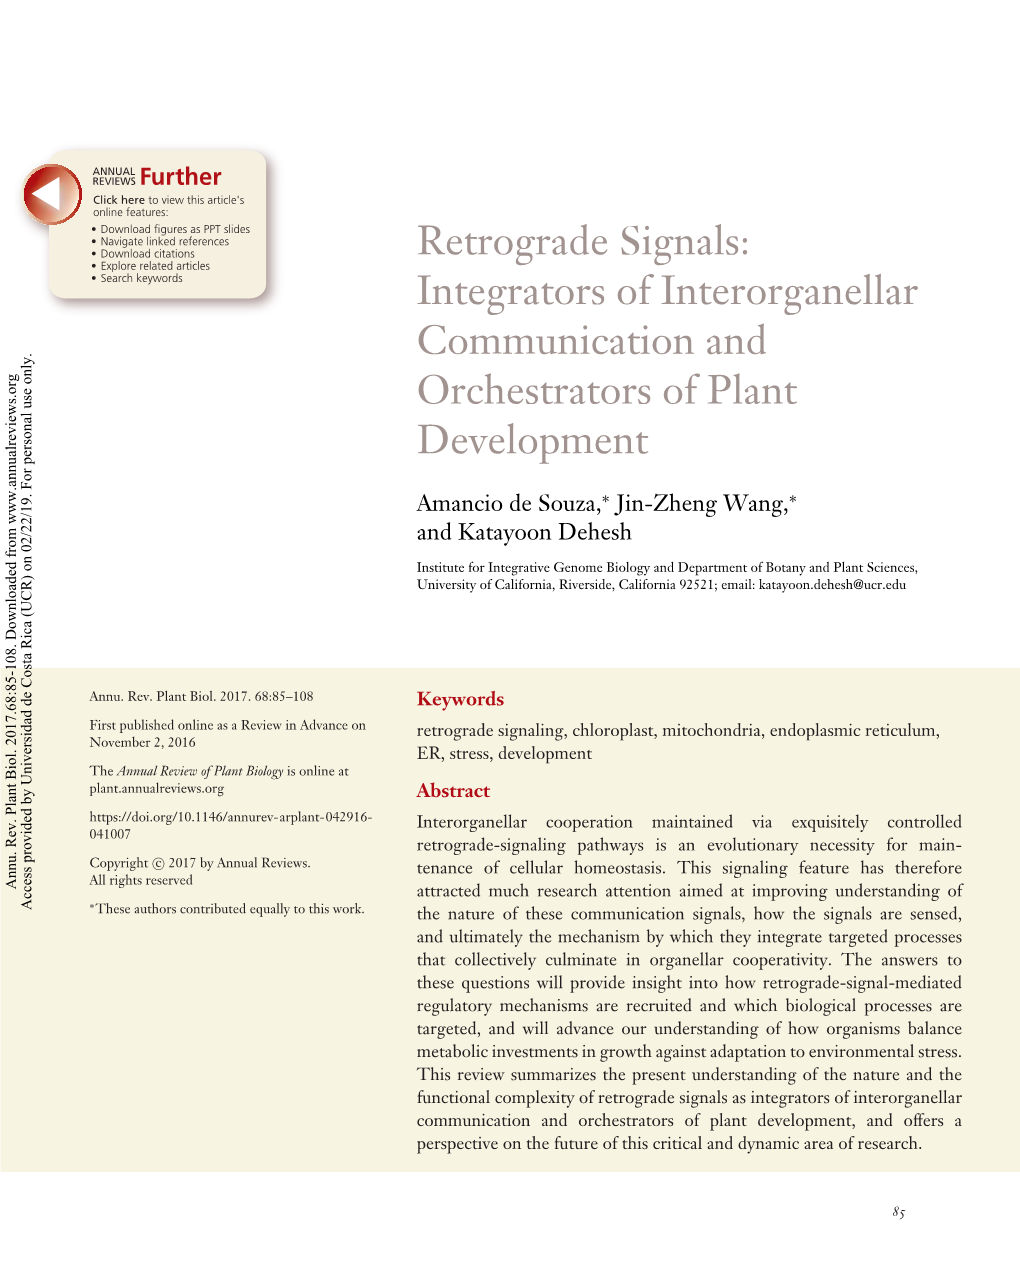 Retrograde Signals: Integrators of Interorganellar Communication And